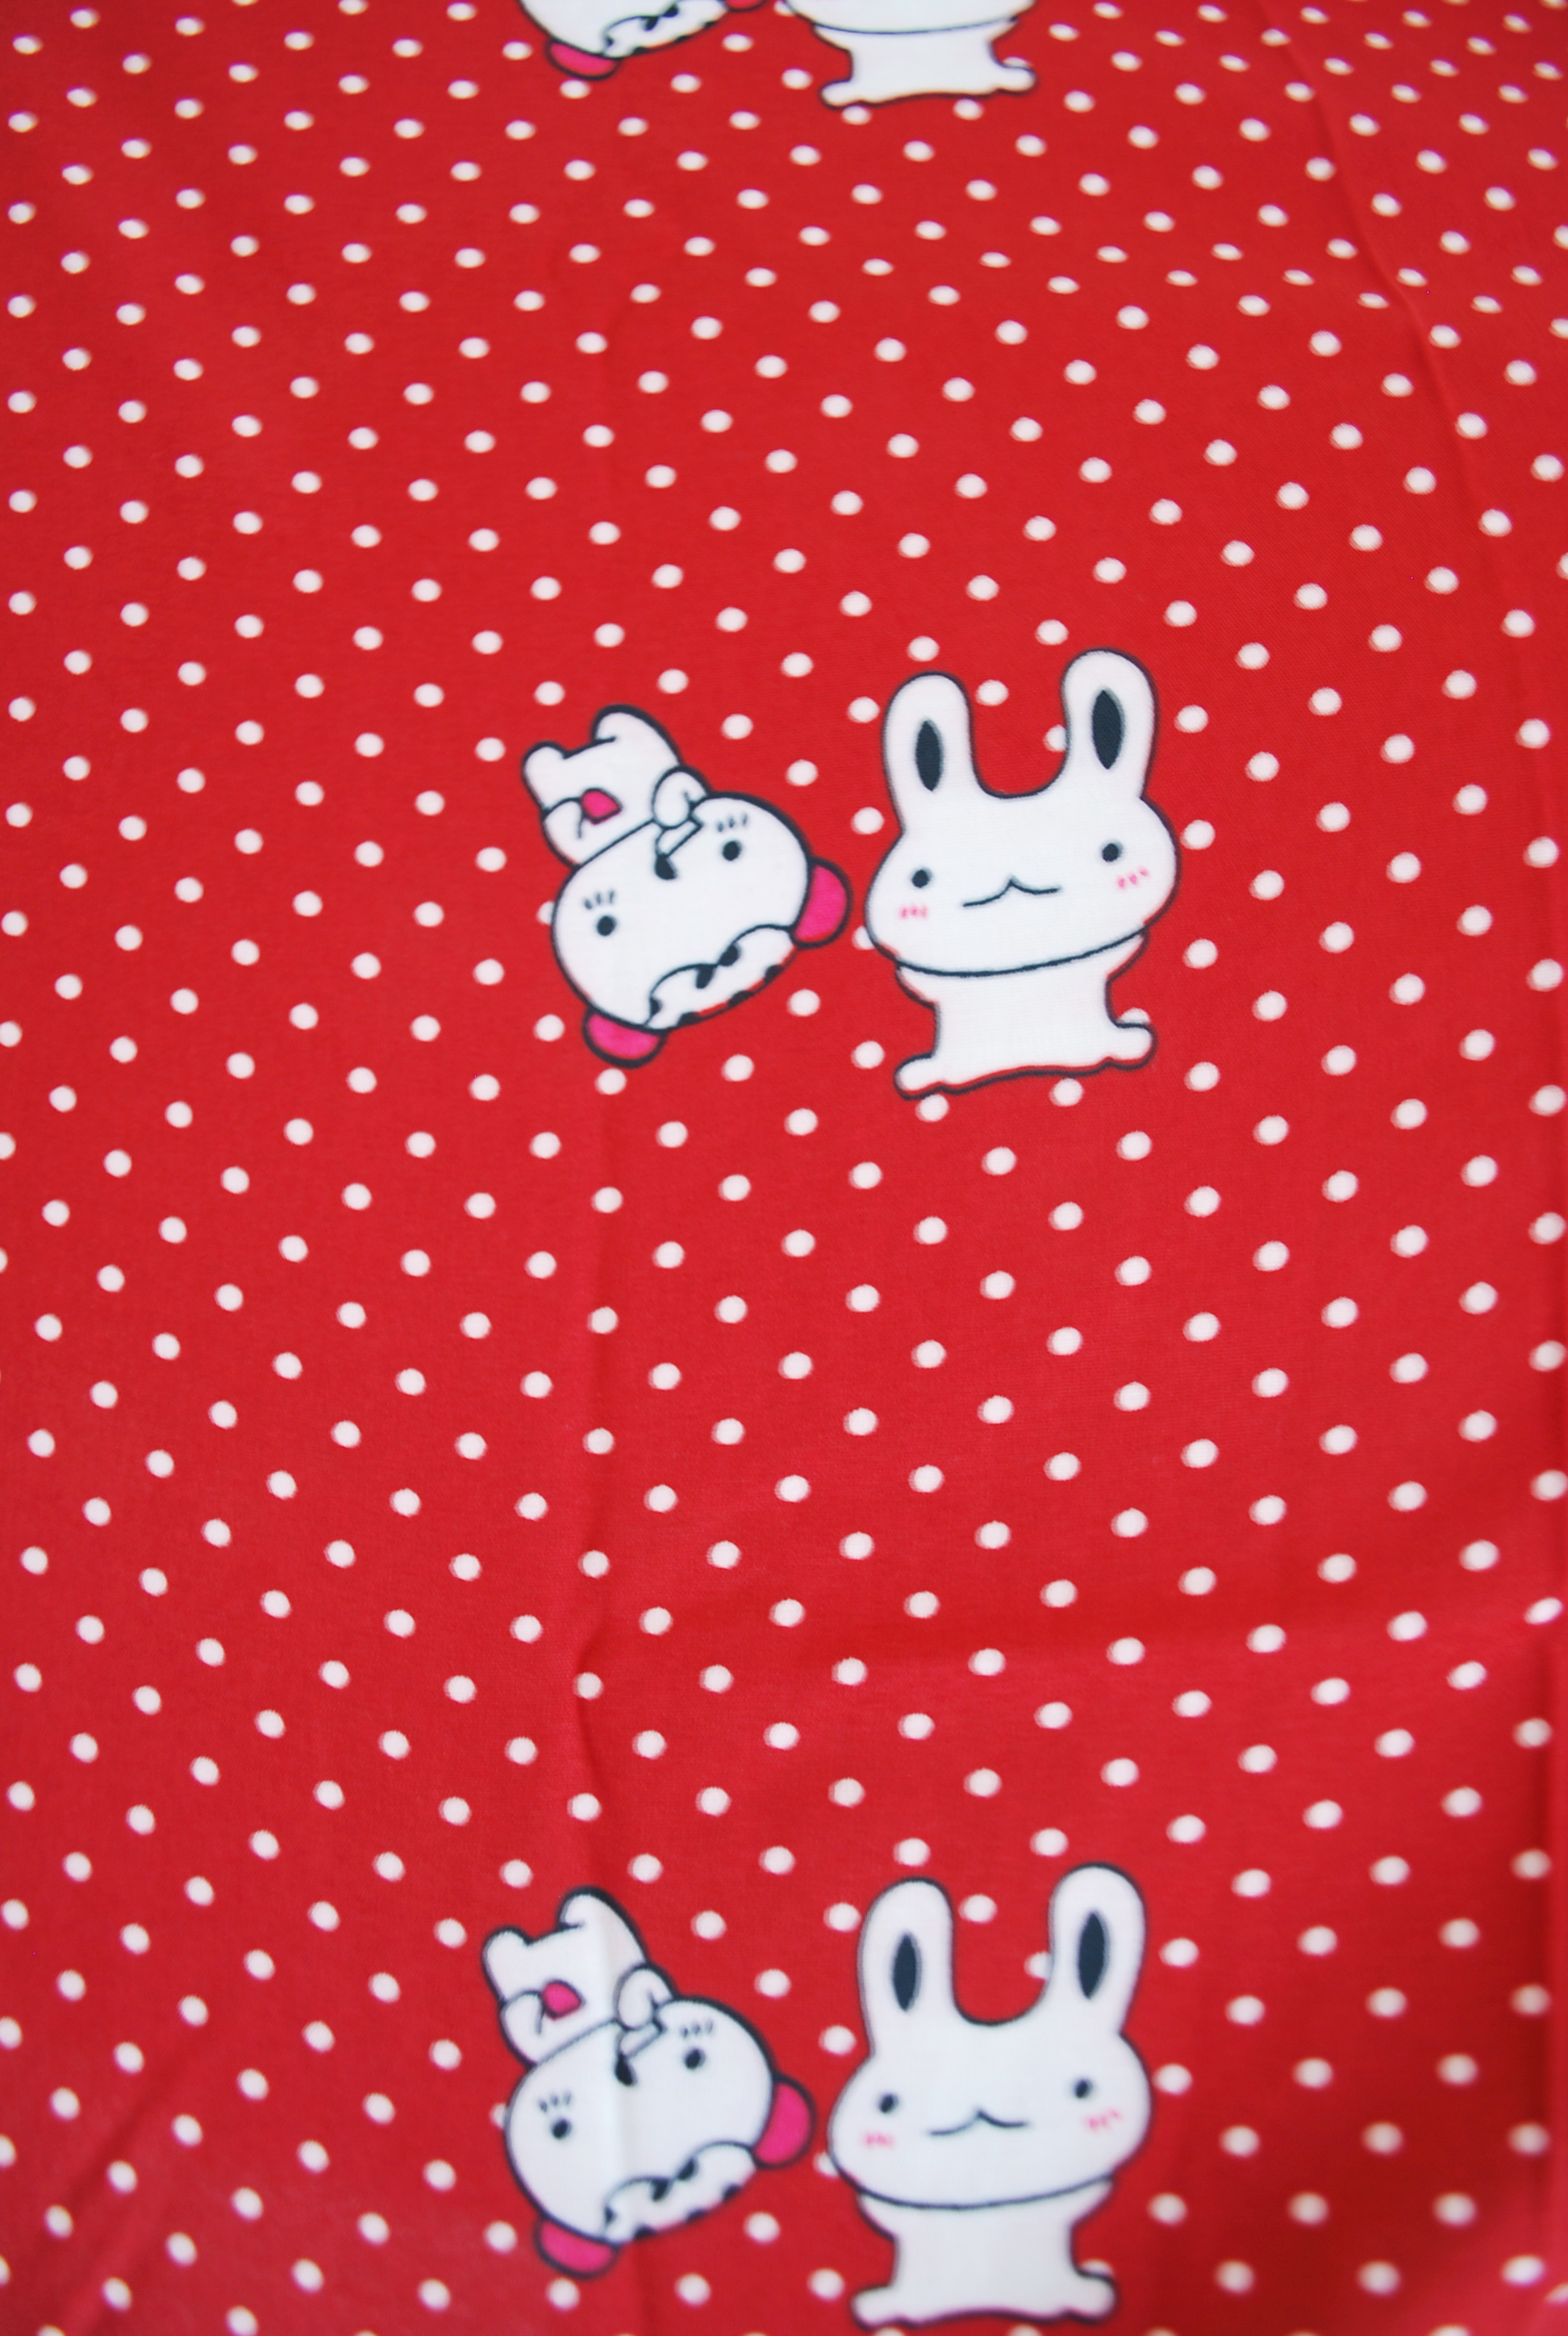 Muko Nursing Cover ผ้าคลุมให้นม AA03-009 กระต่ายแดง